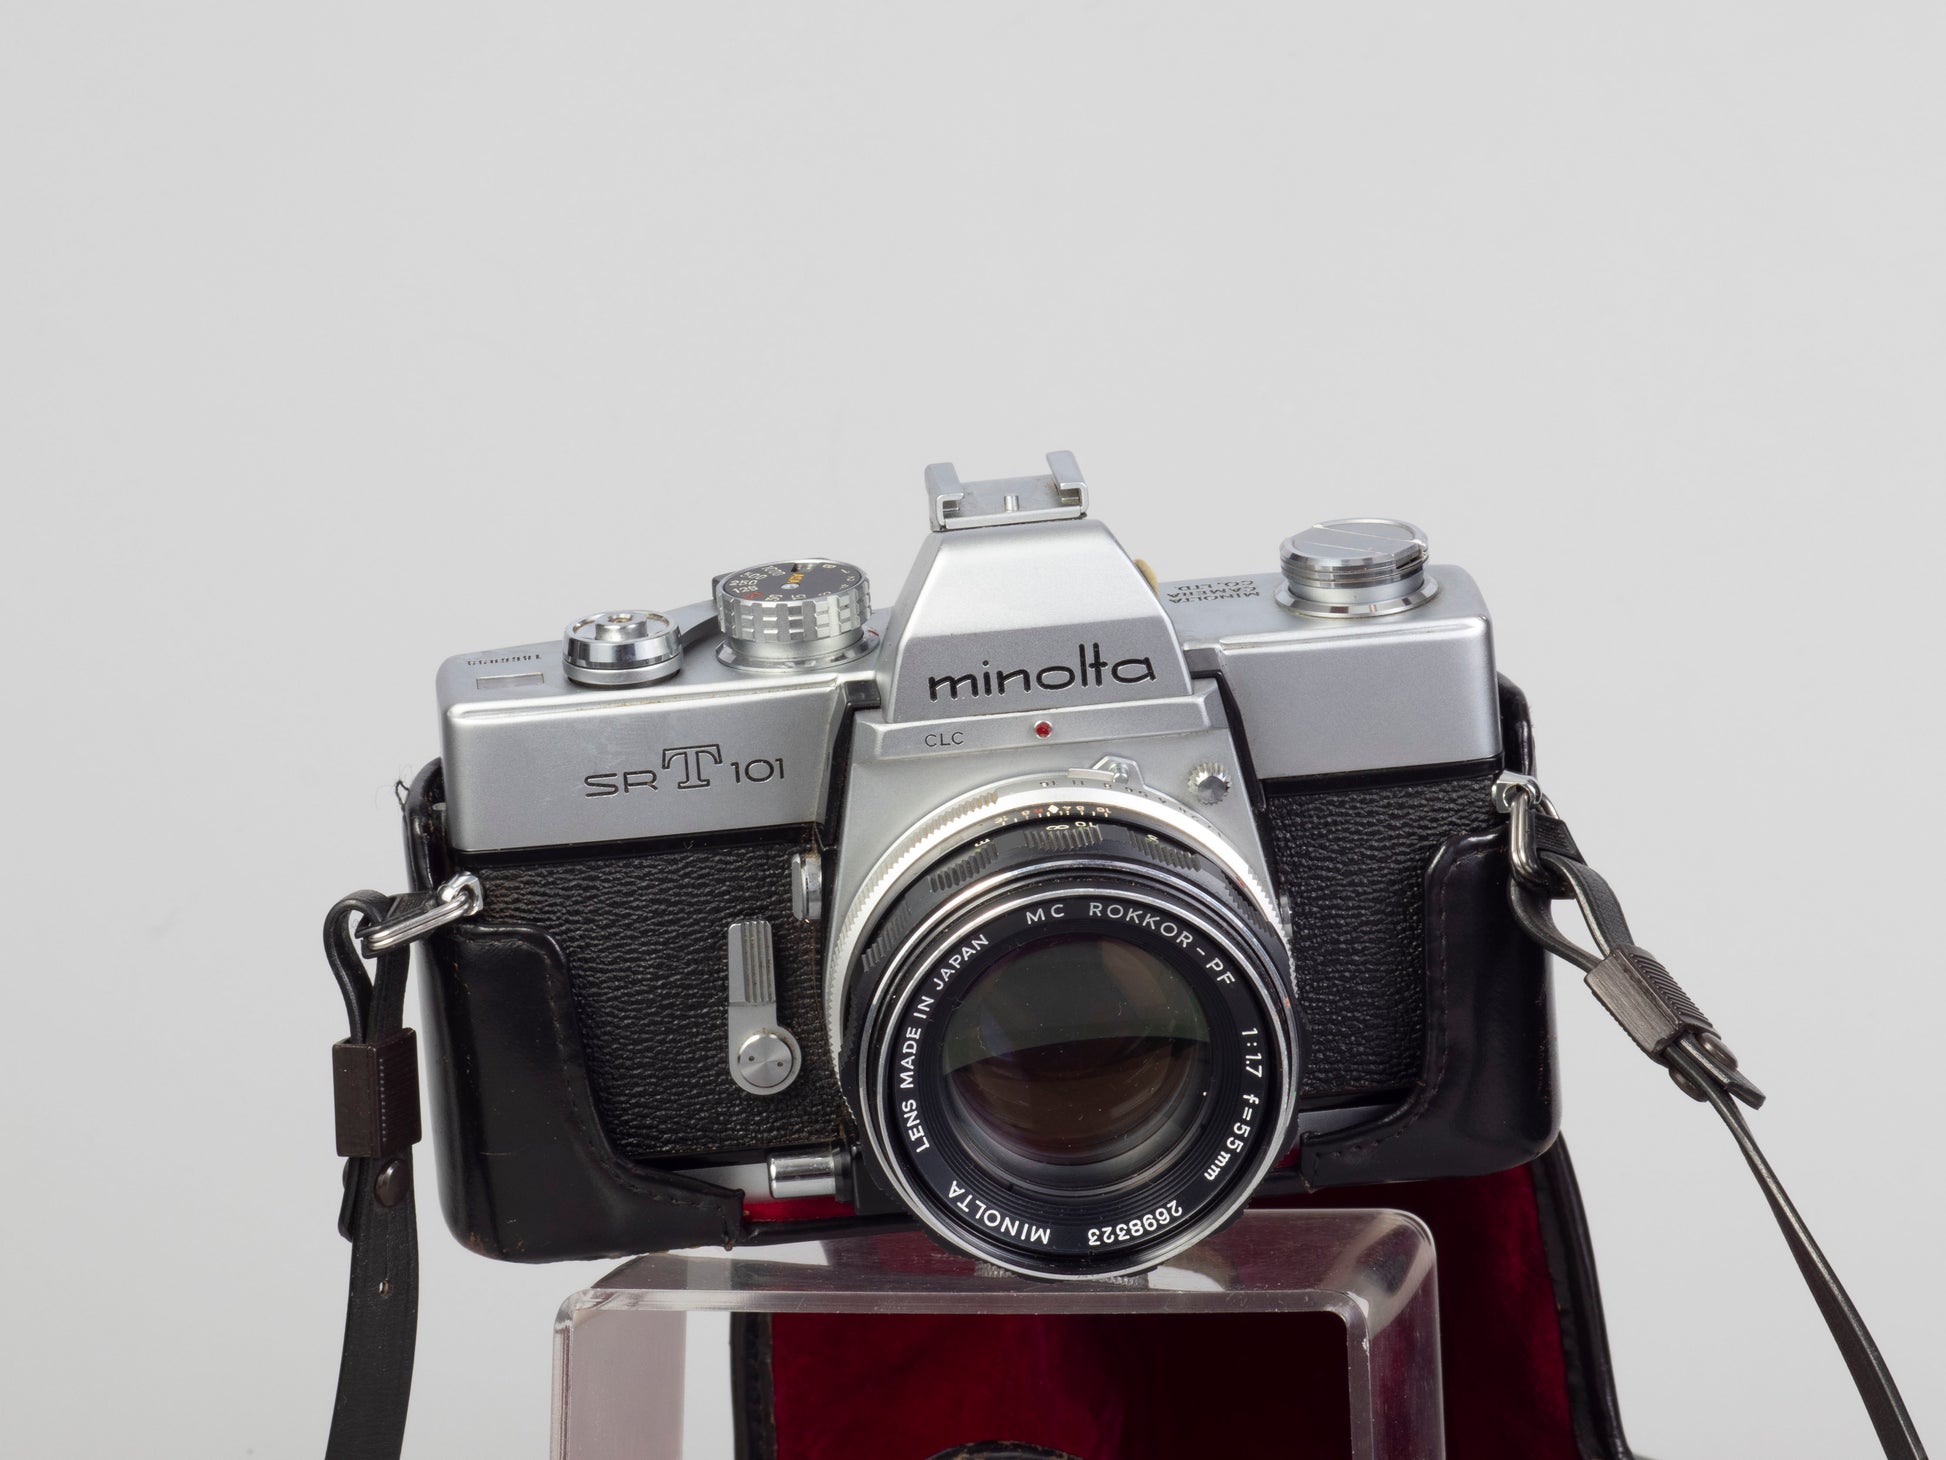 The Minolta SRT-101 35mm film SLR camera with MC Rocker PF 55mm f1.7 lens